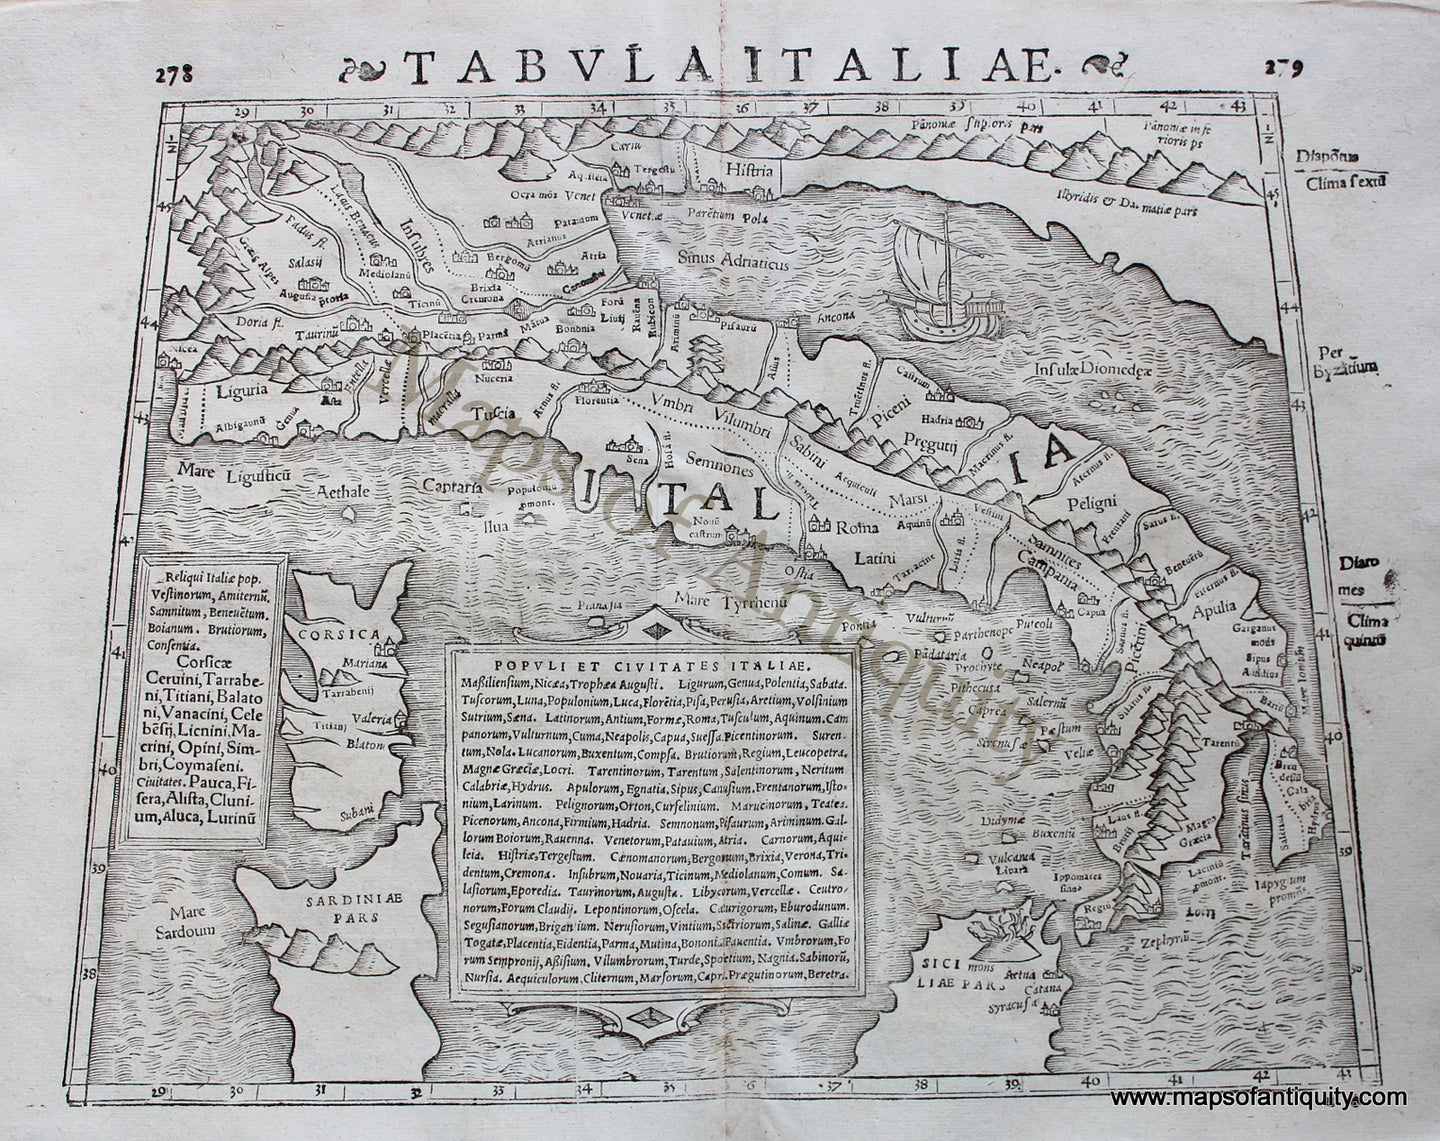 Antique-Black-and-White-Engraved-Map-Tabula-Italiae-Italy-**********-Europe-Italy-1542-Munster-Maps-Of-Antiquity